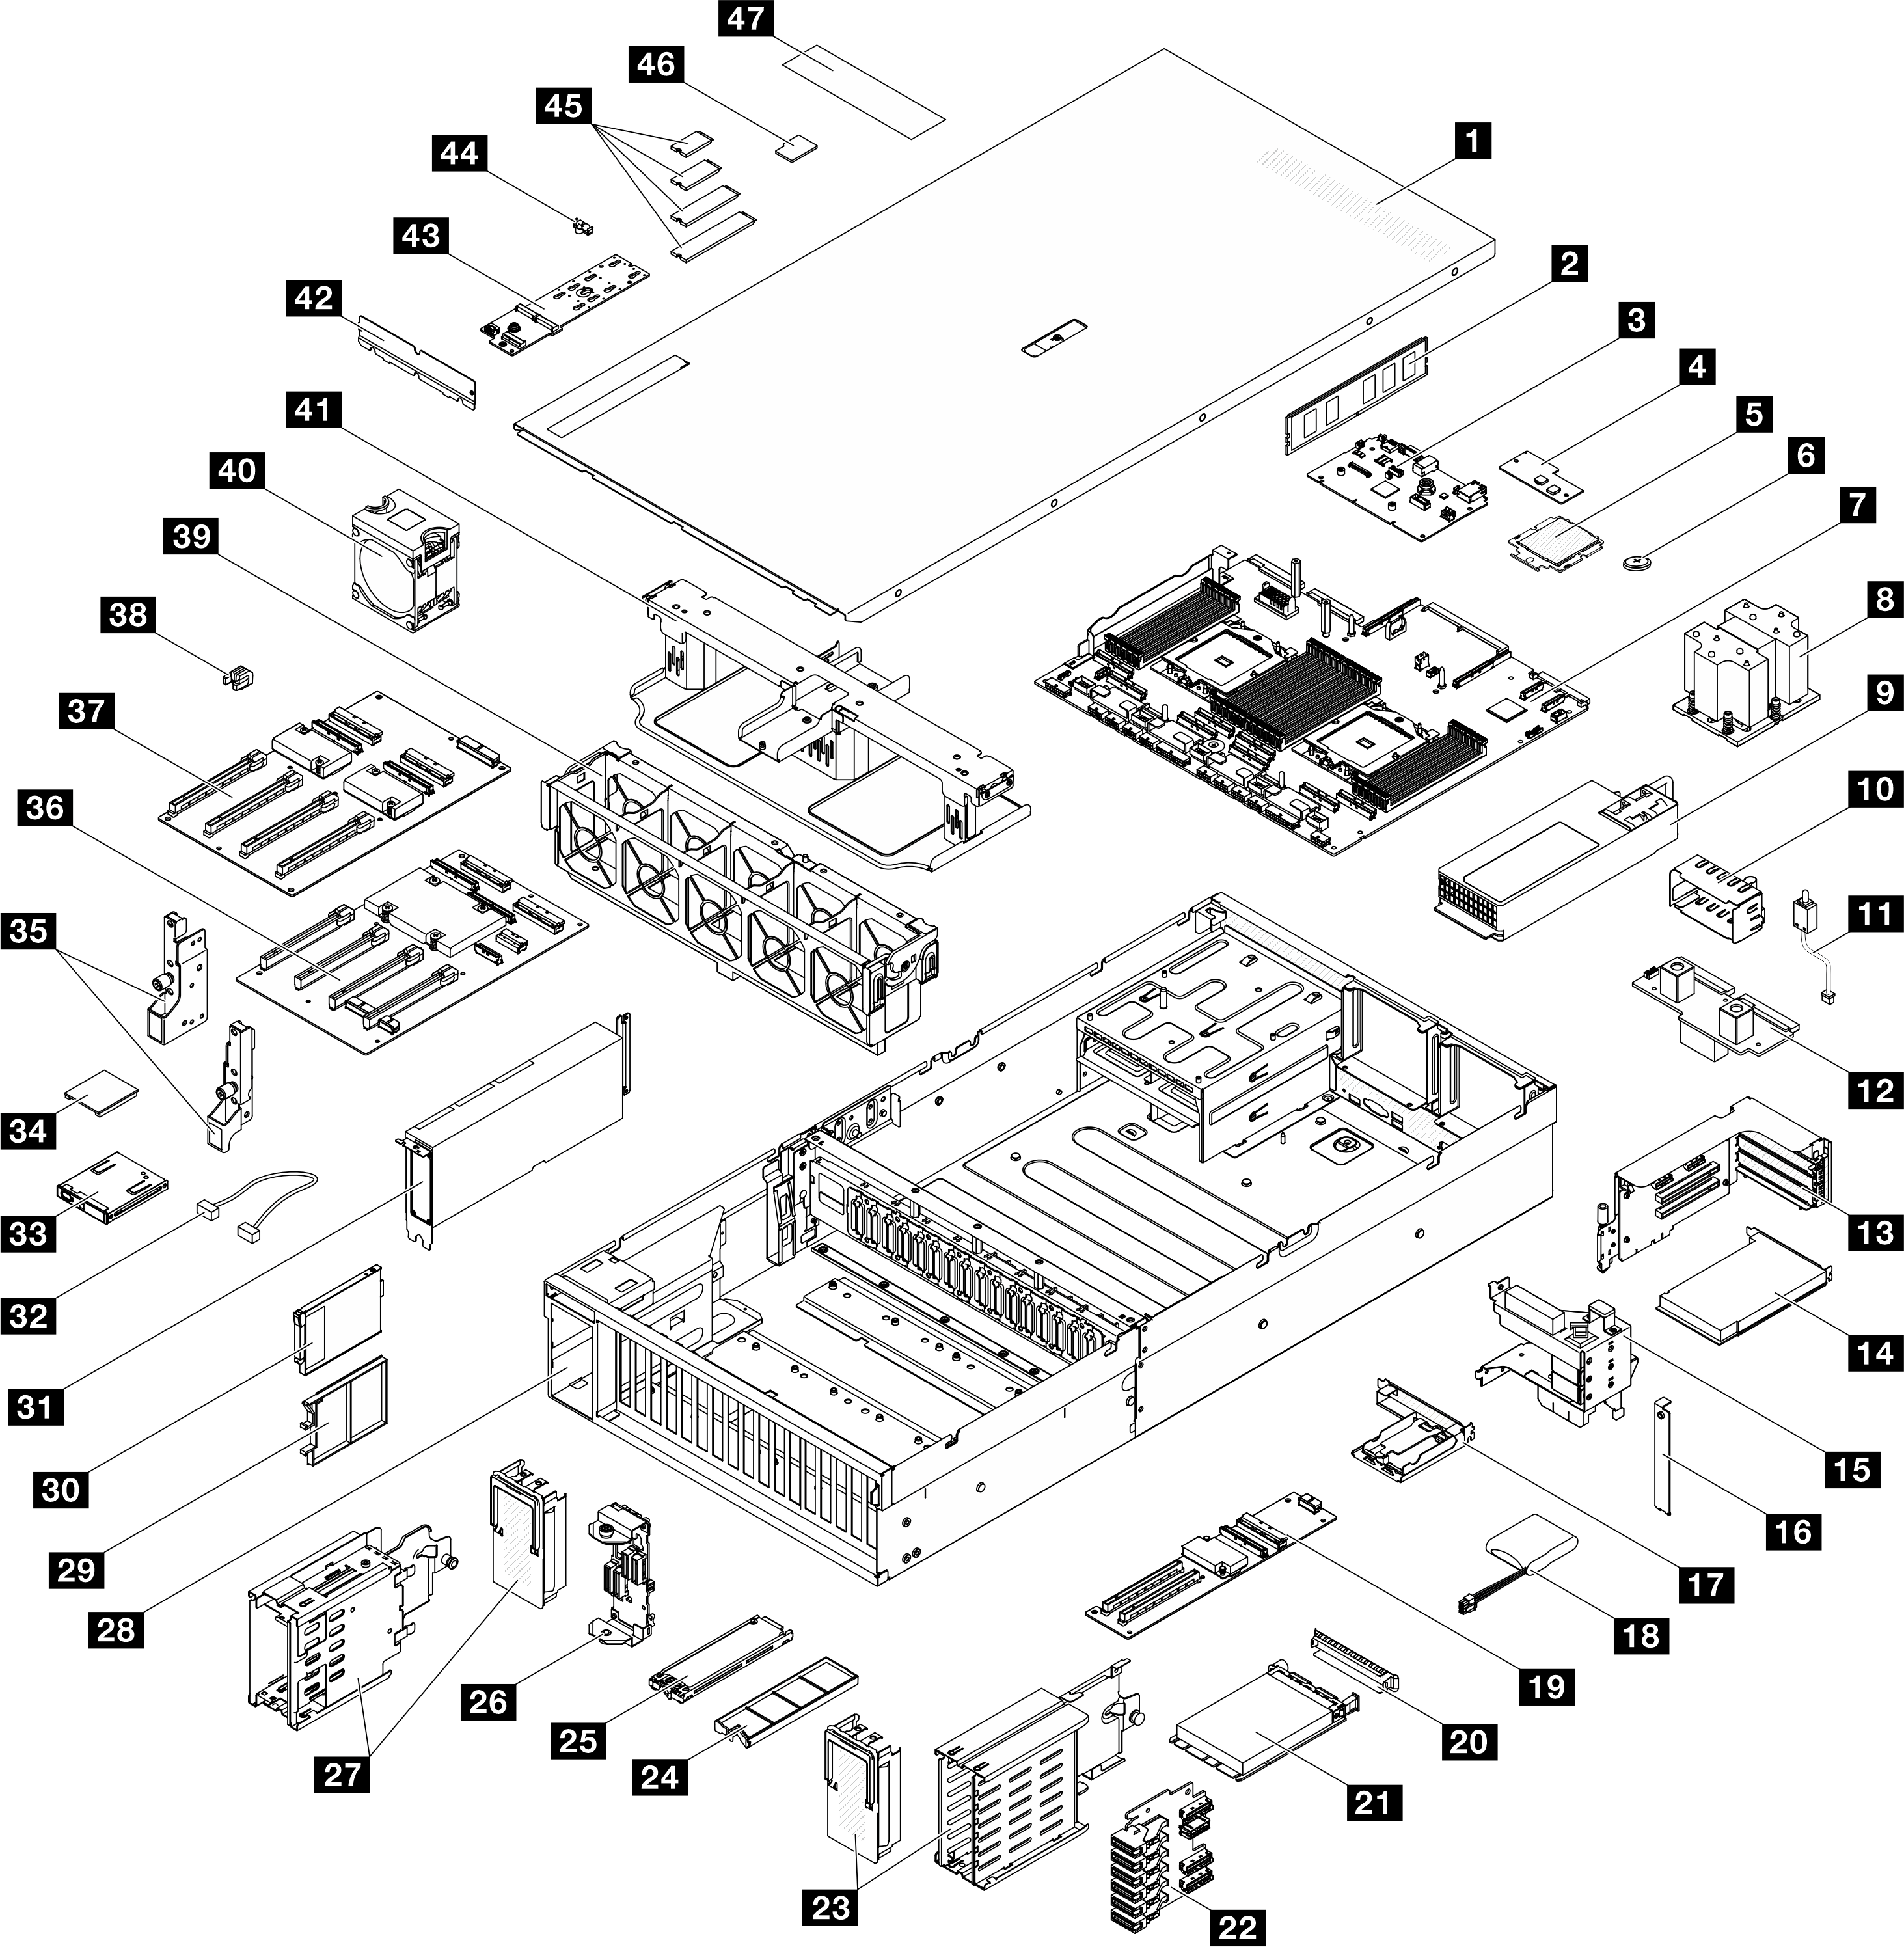 Server components of the 8-DW GPU Model